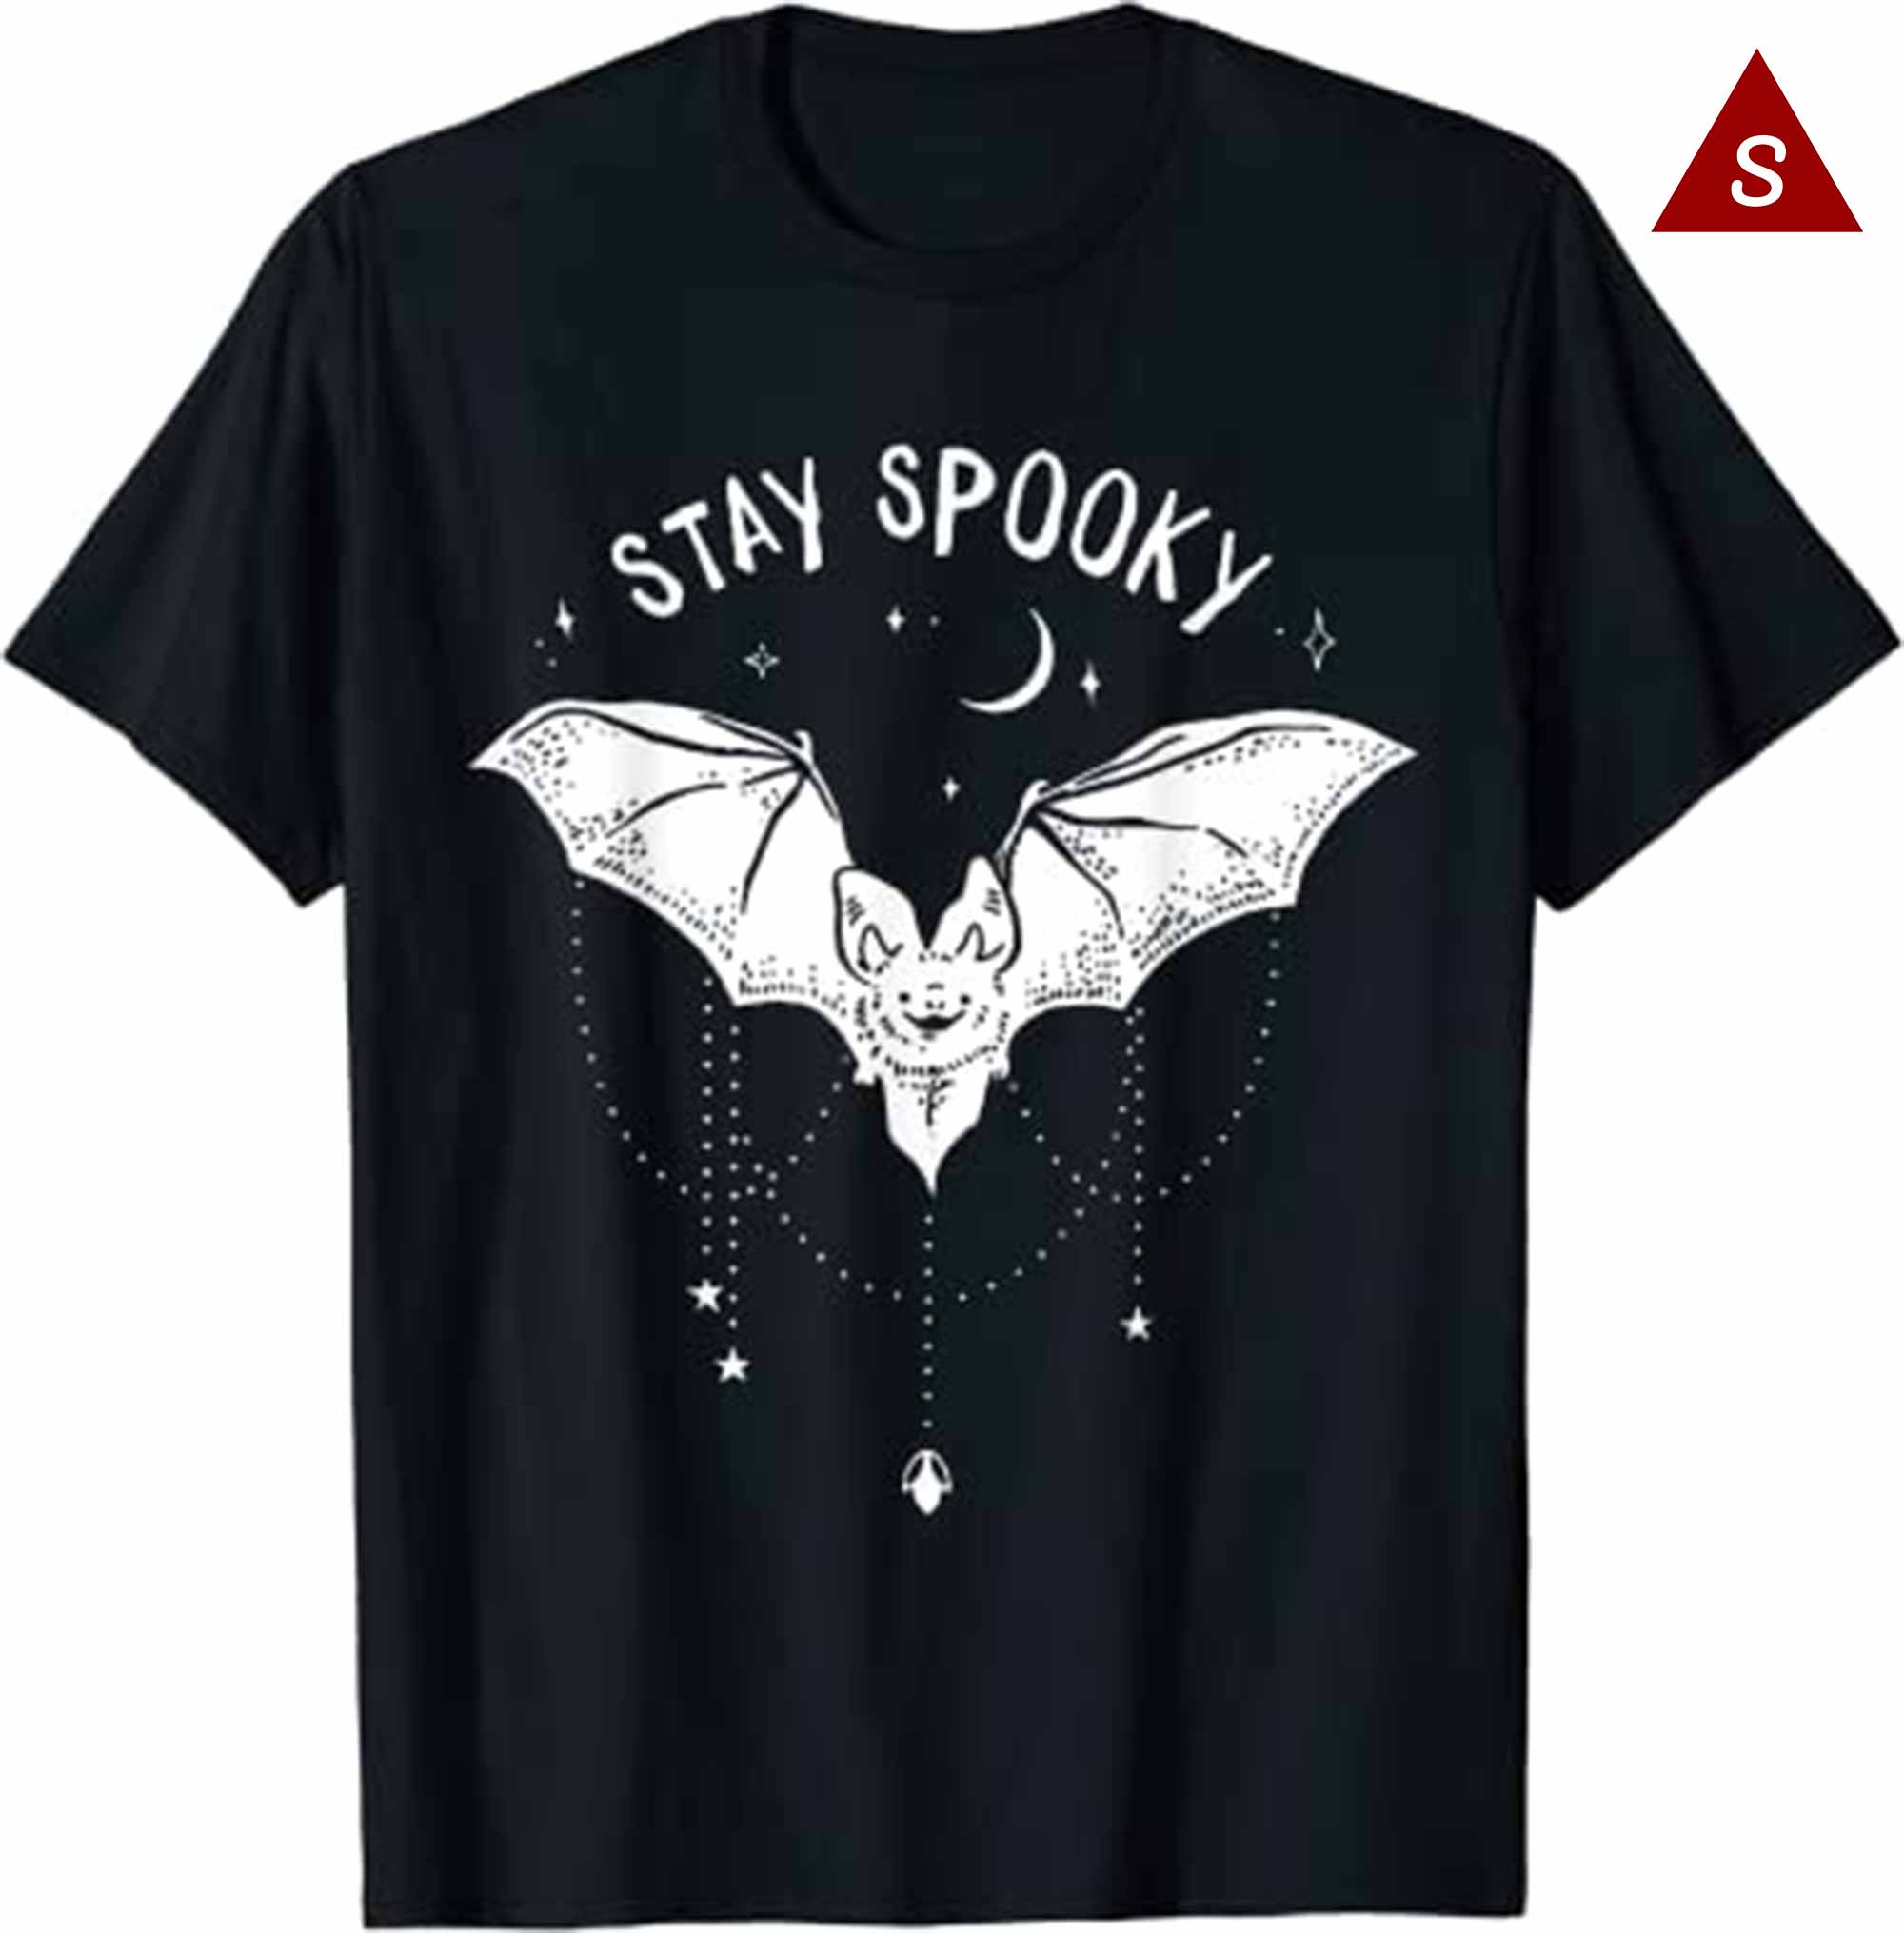 Stay Spooky Cute Vampire Bat Halloween T Shirt